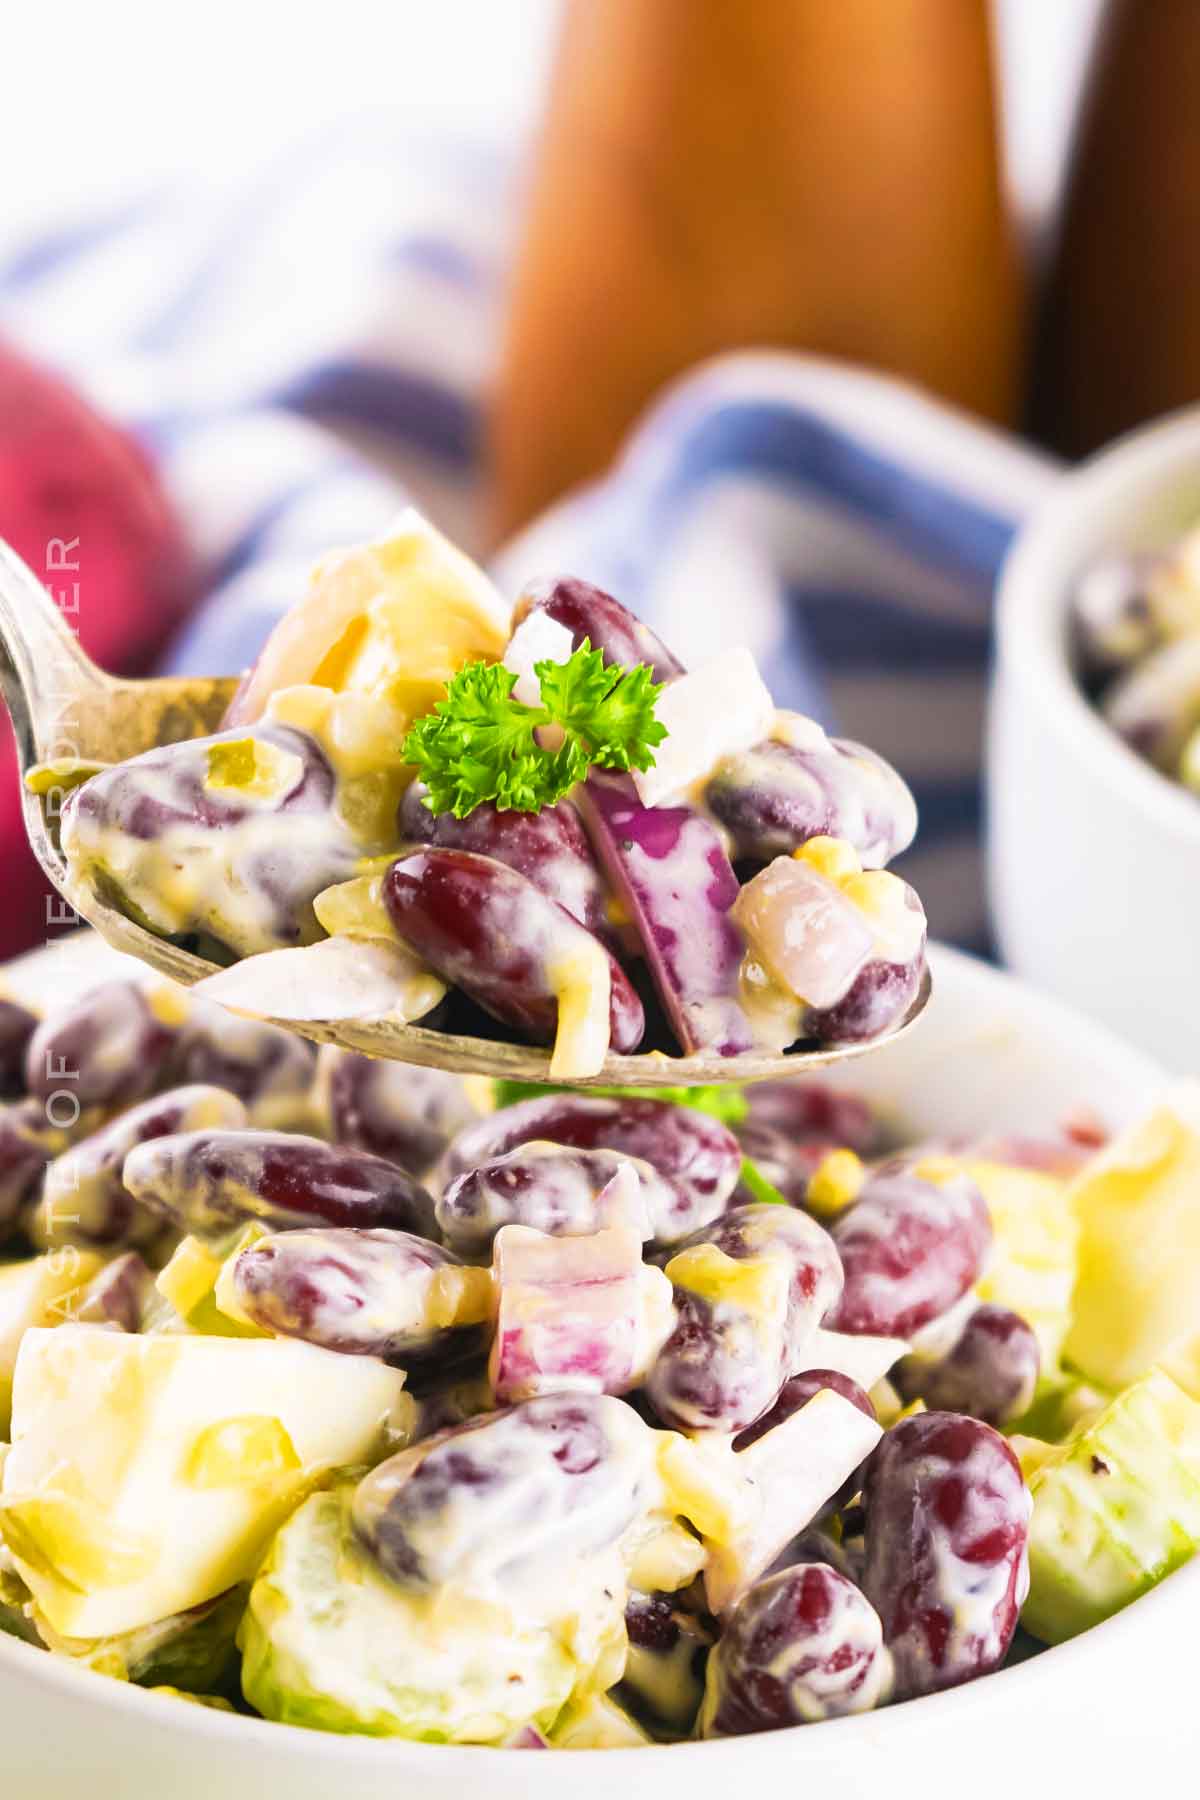 Kidney Bean Salad with Mayo